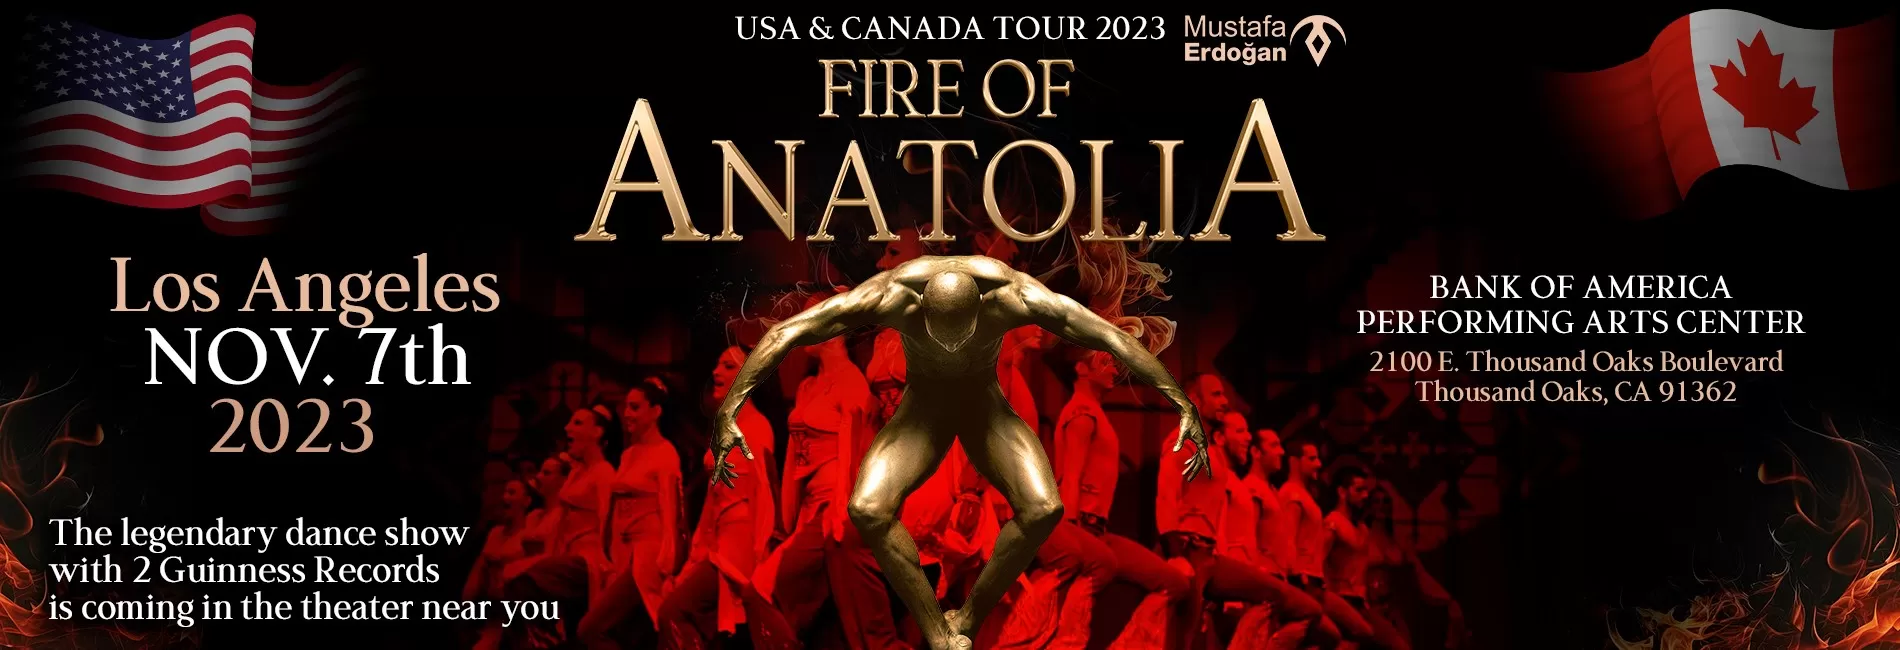 Fire of Anatolia / USA Tour